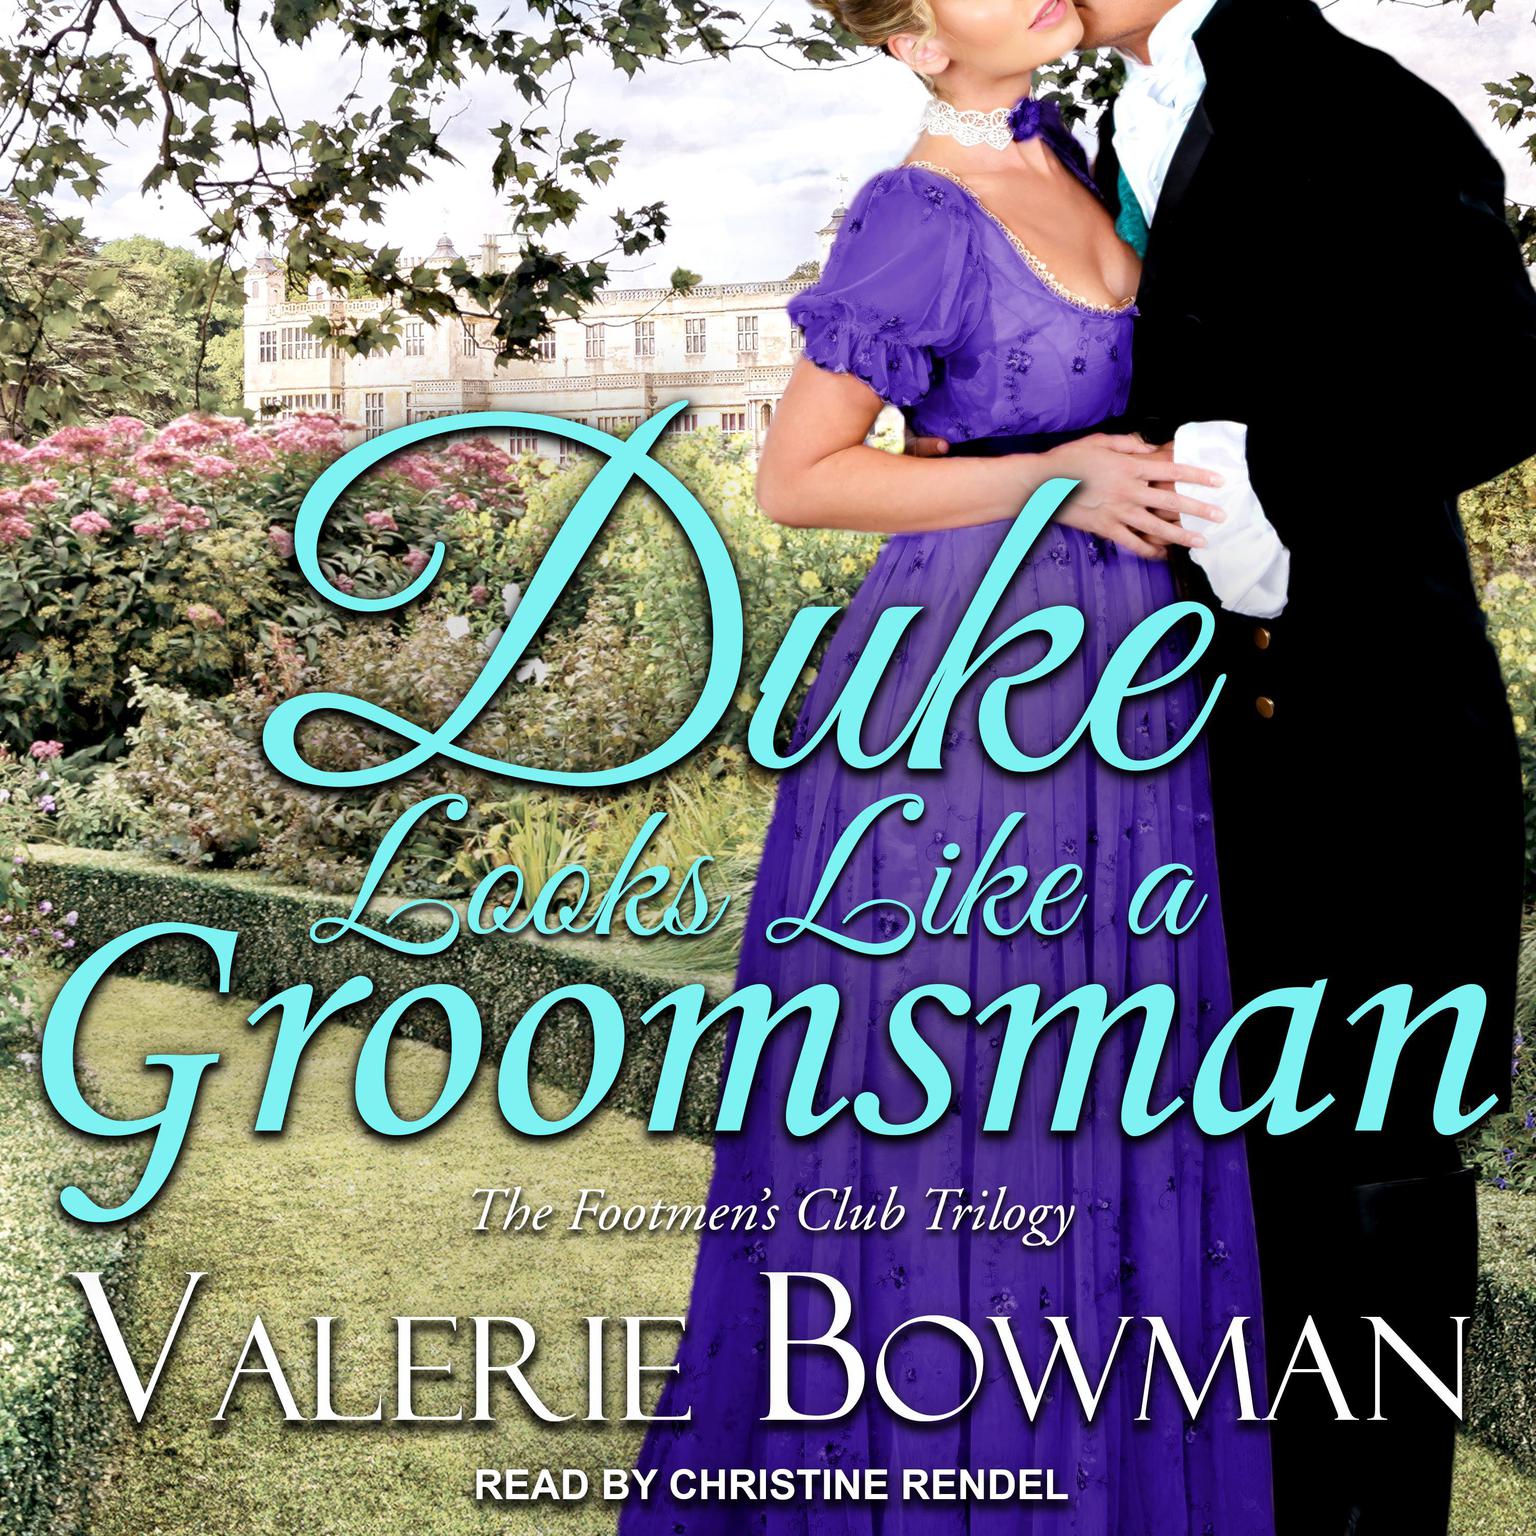 Duke Looks Like a Groomsman Audiobook, by Valerie Bowman